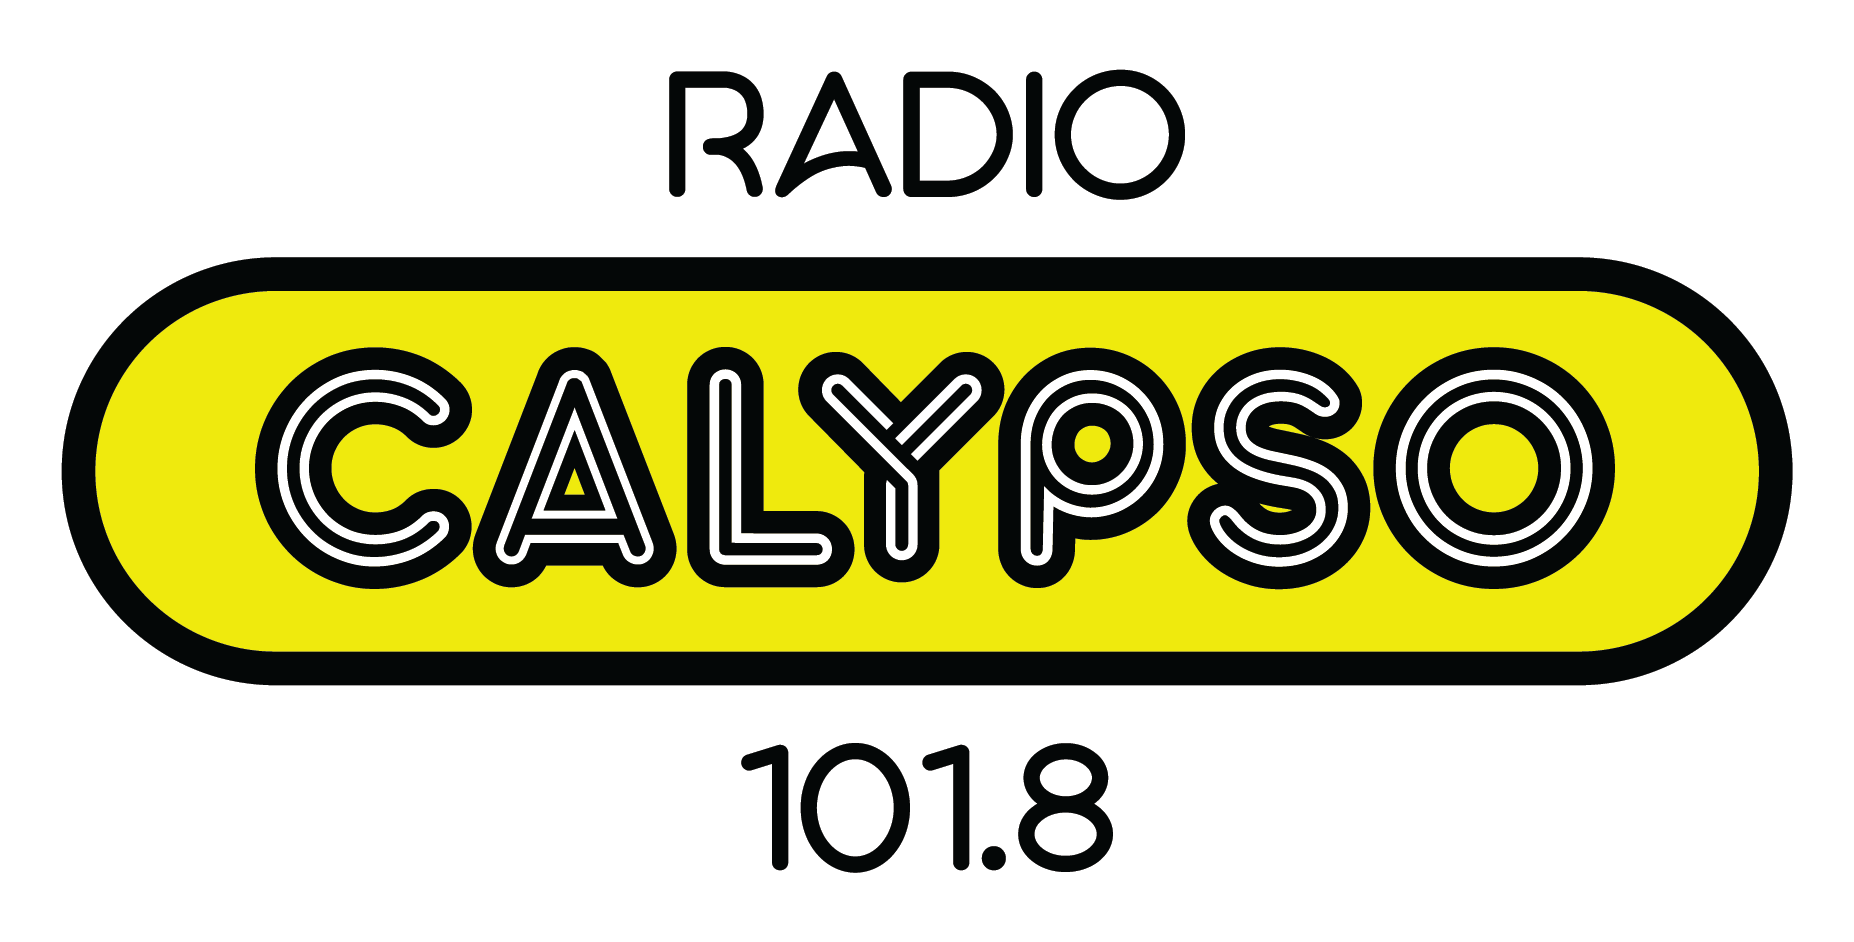 Calypso radio logo